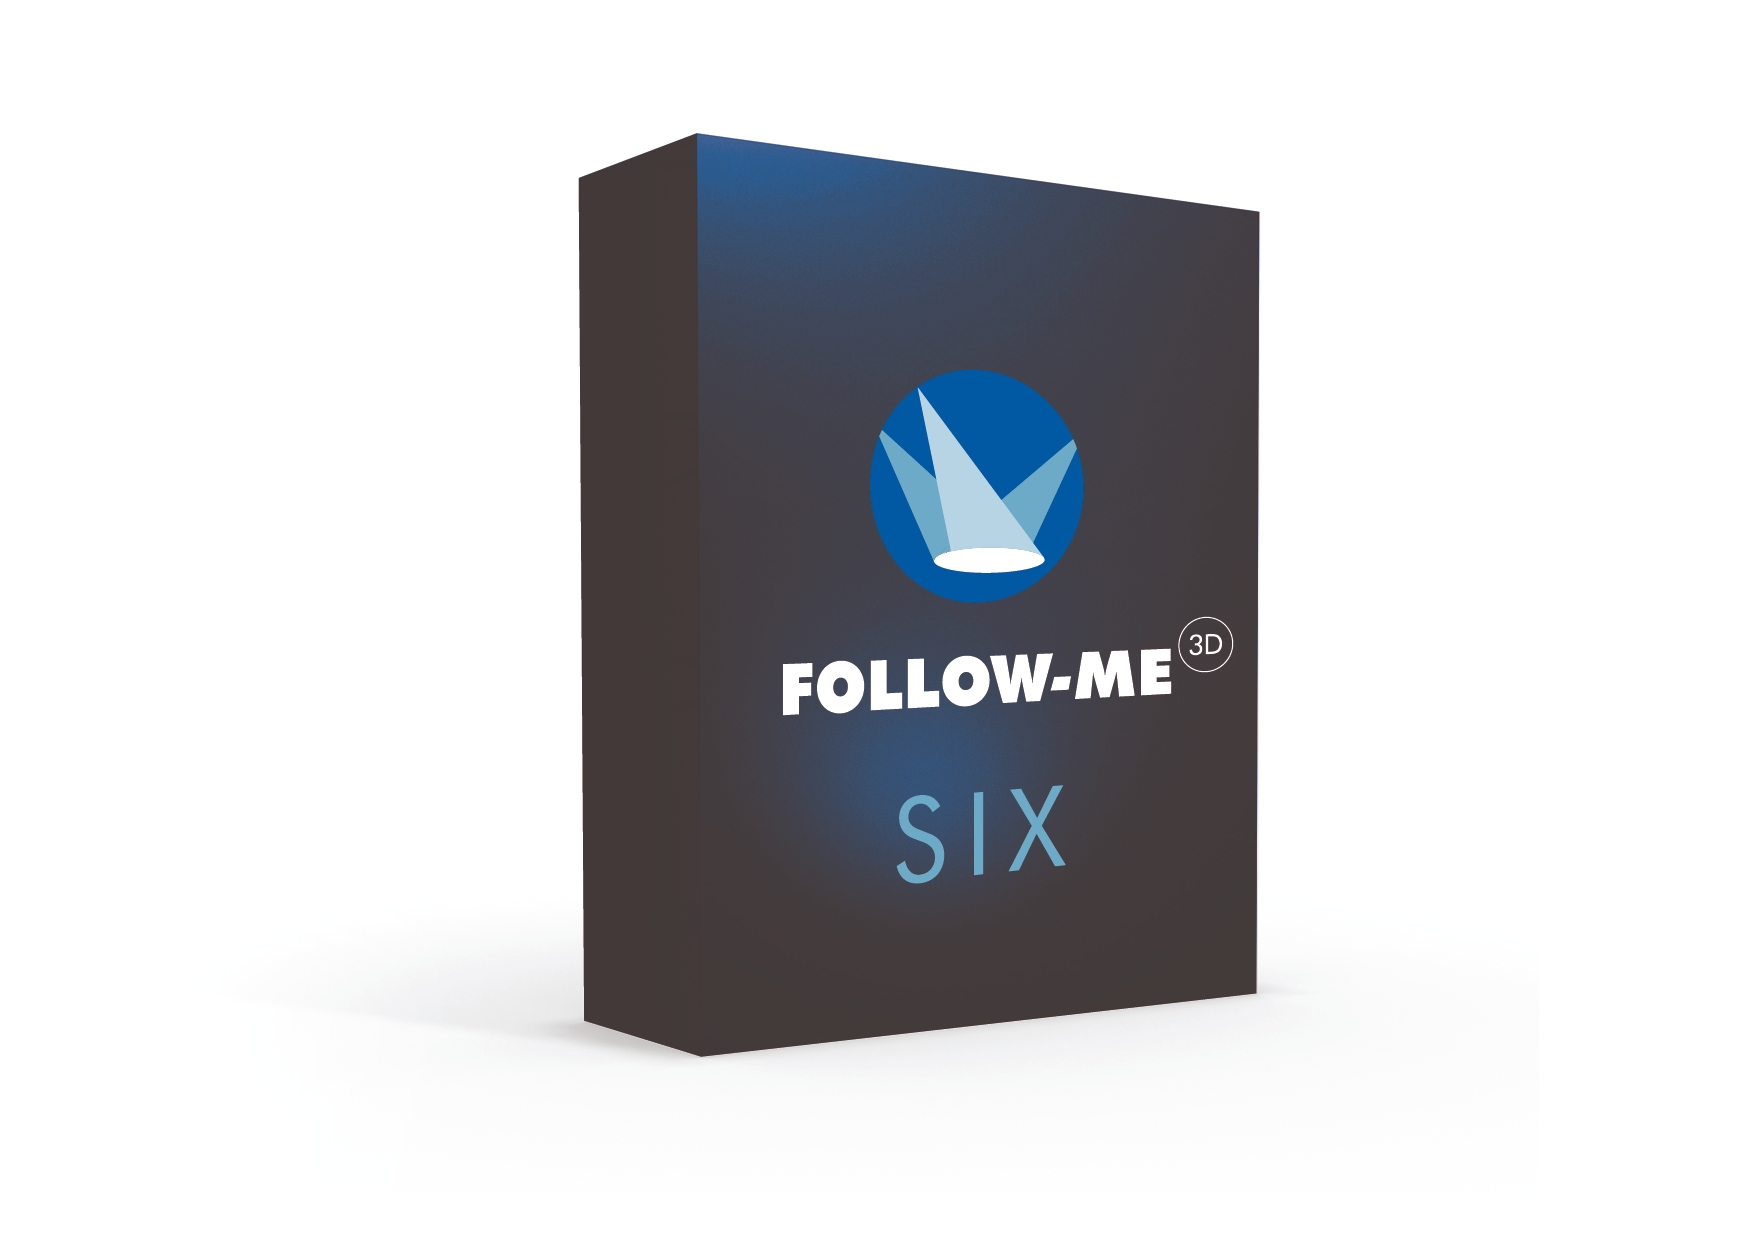 Follow-Me 3D SIX System, Verfolgersysteme, Produkte/Shop